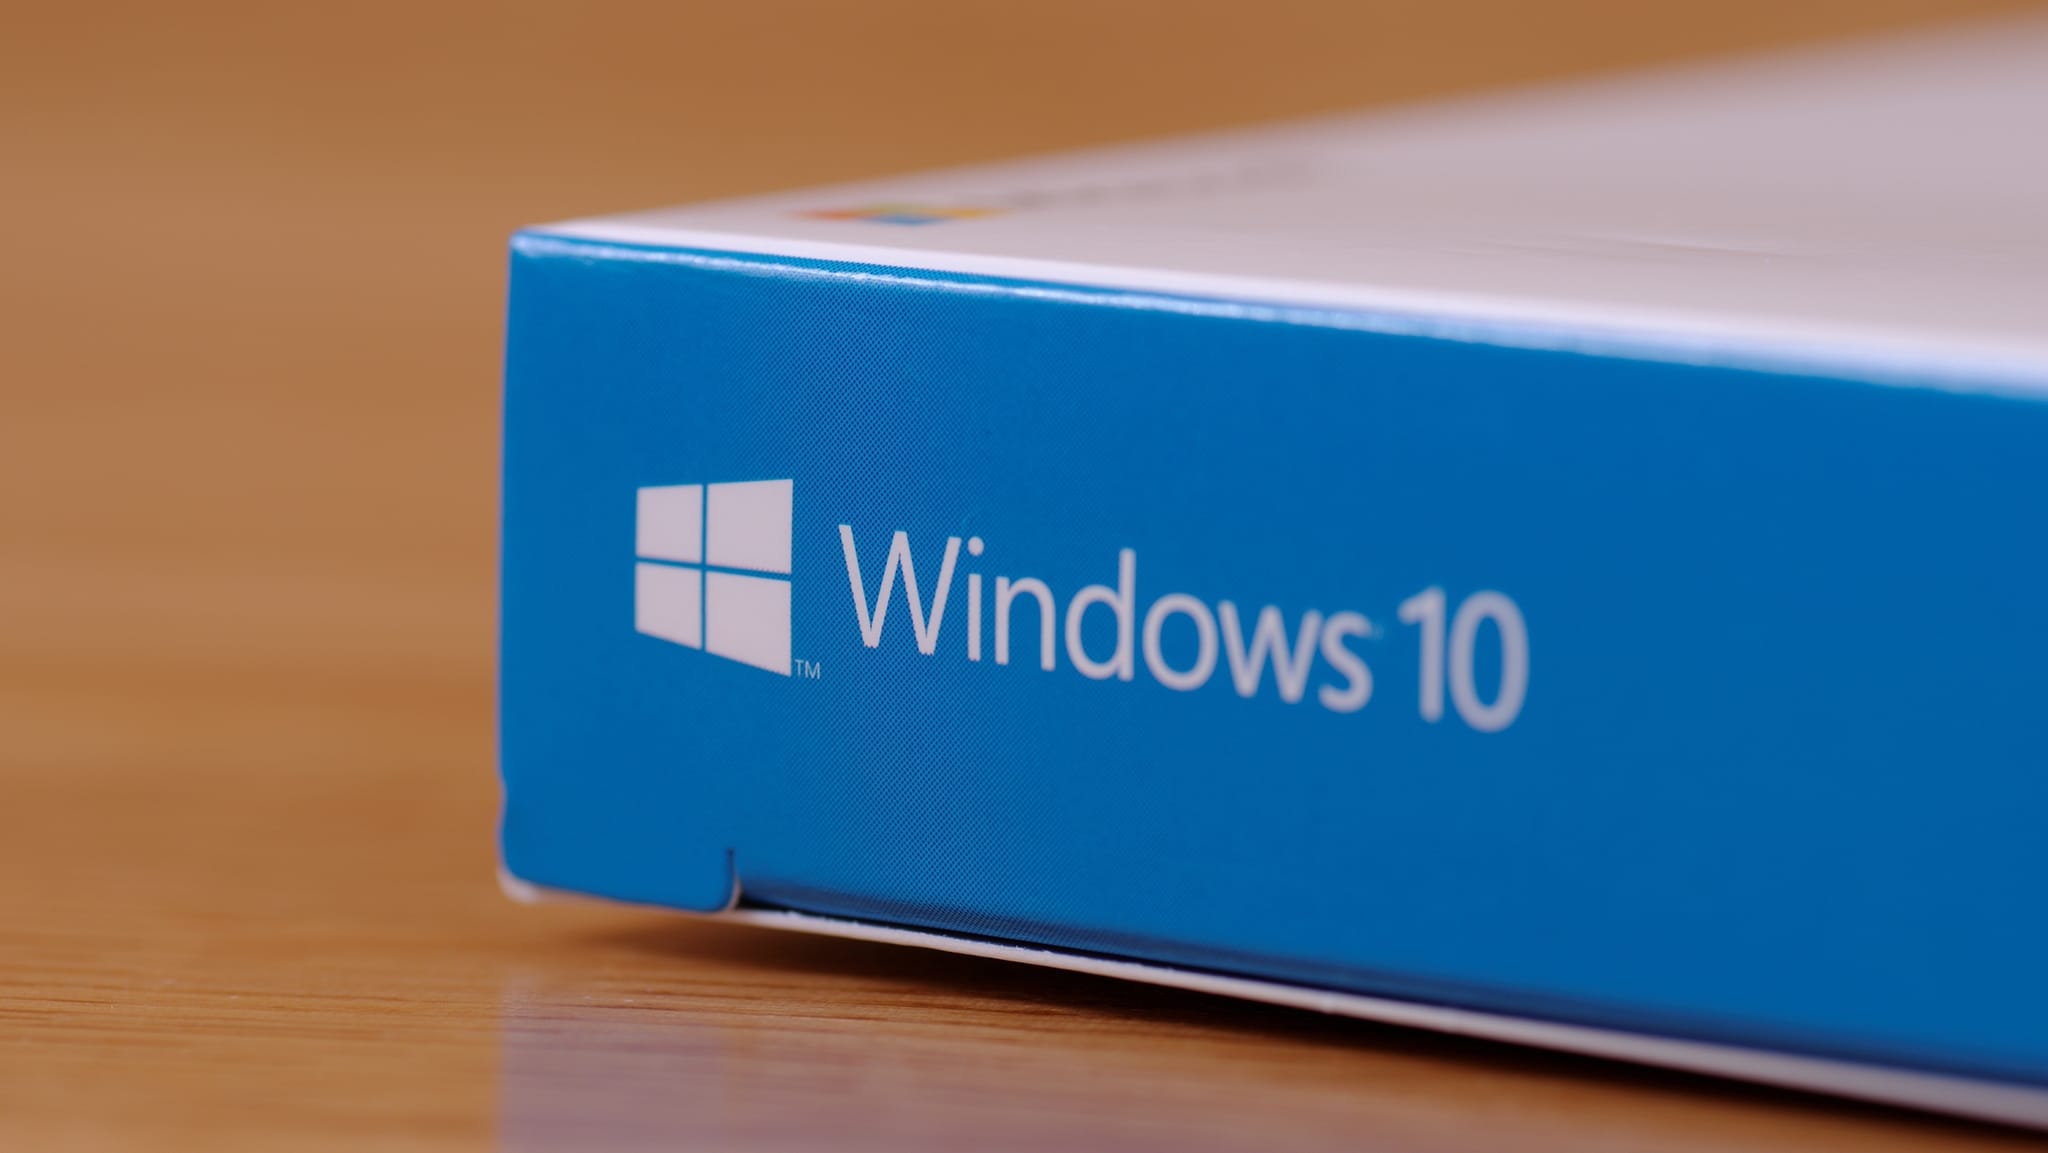 Windows 10, Microsoft